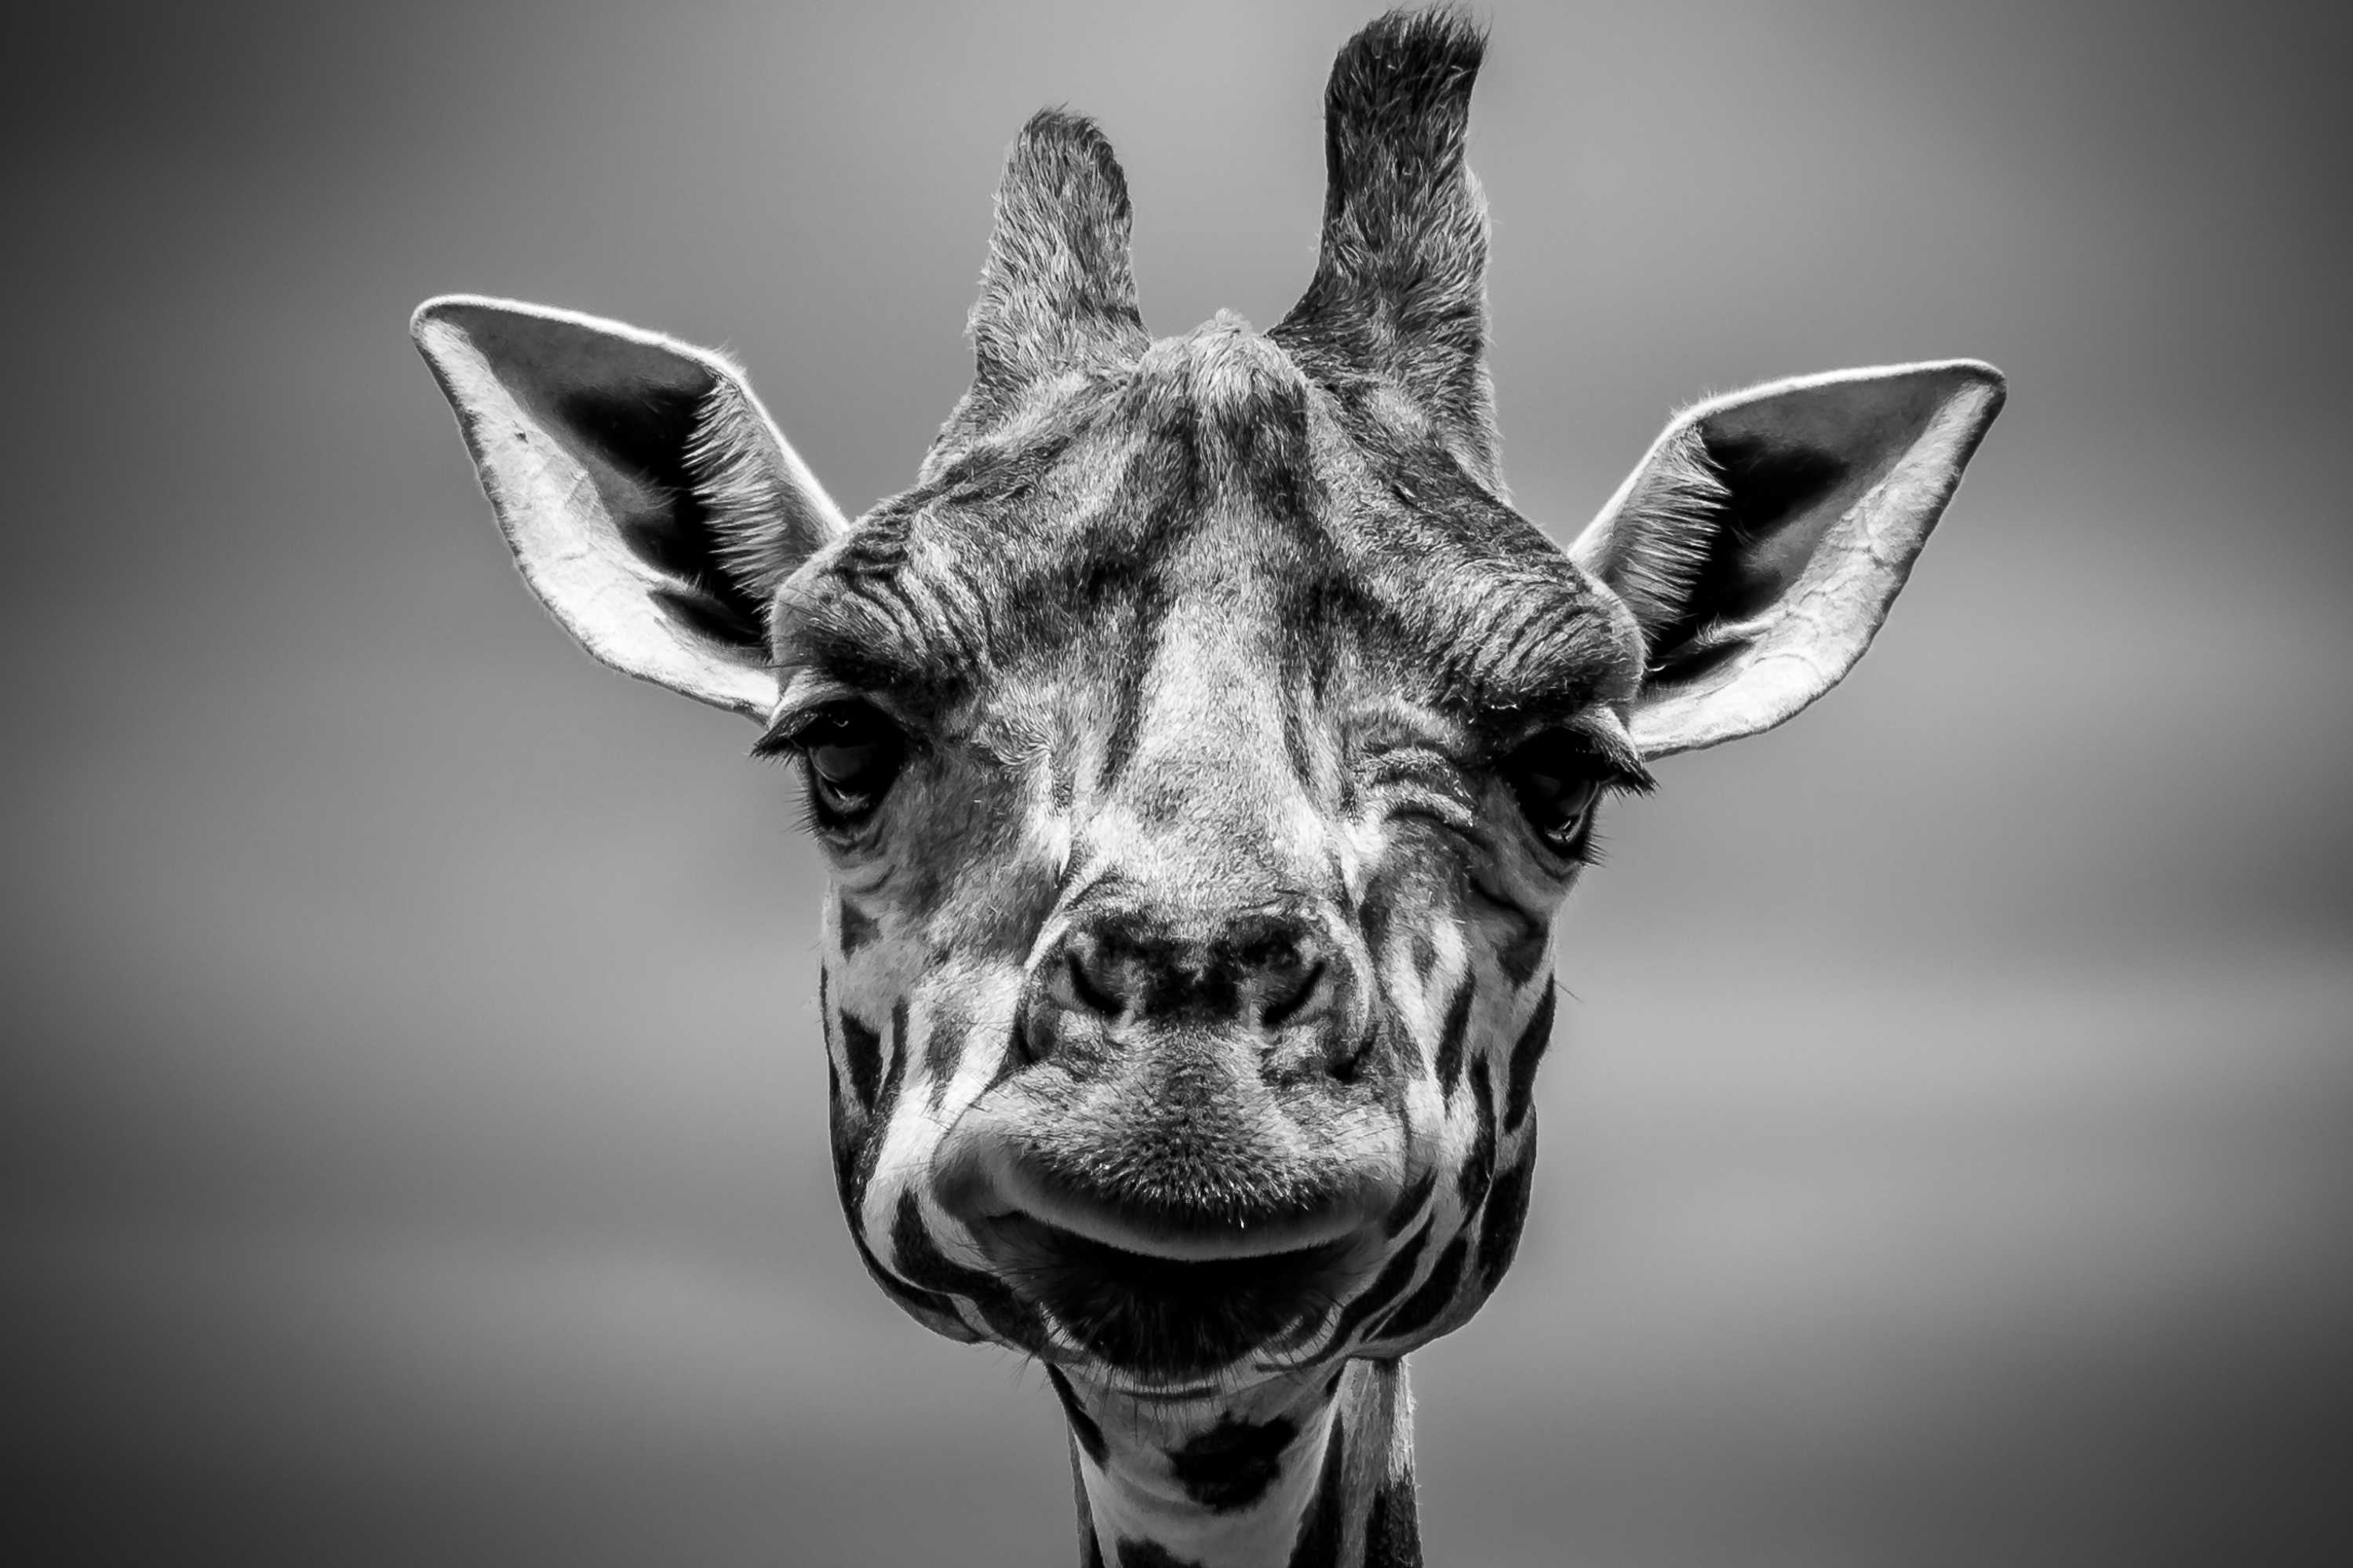 Бесплатное фото Портрет жирафа на монохромном фото